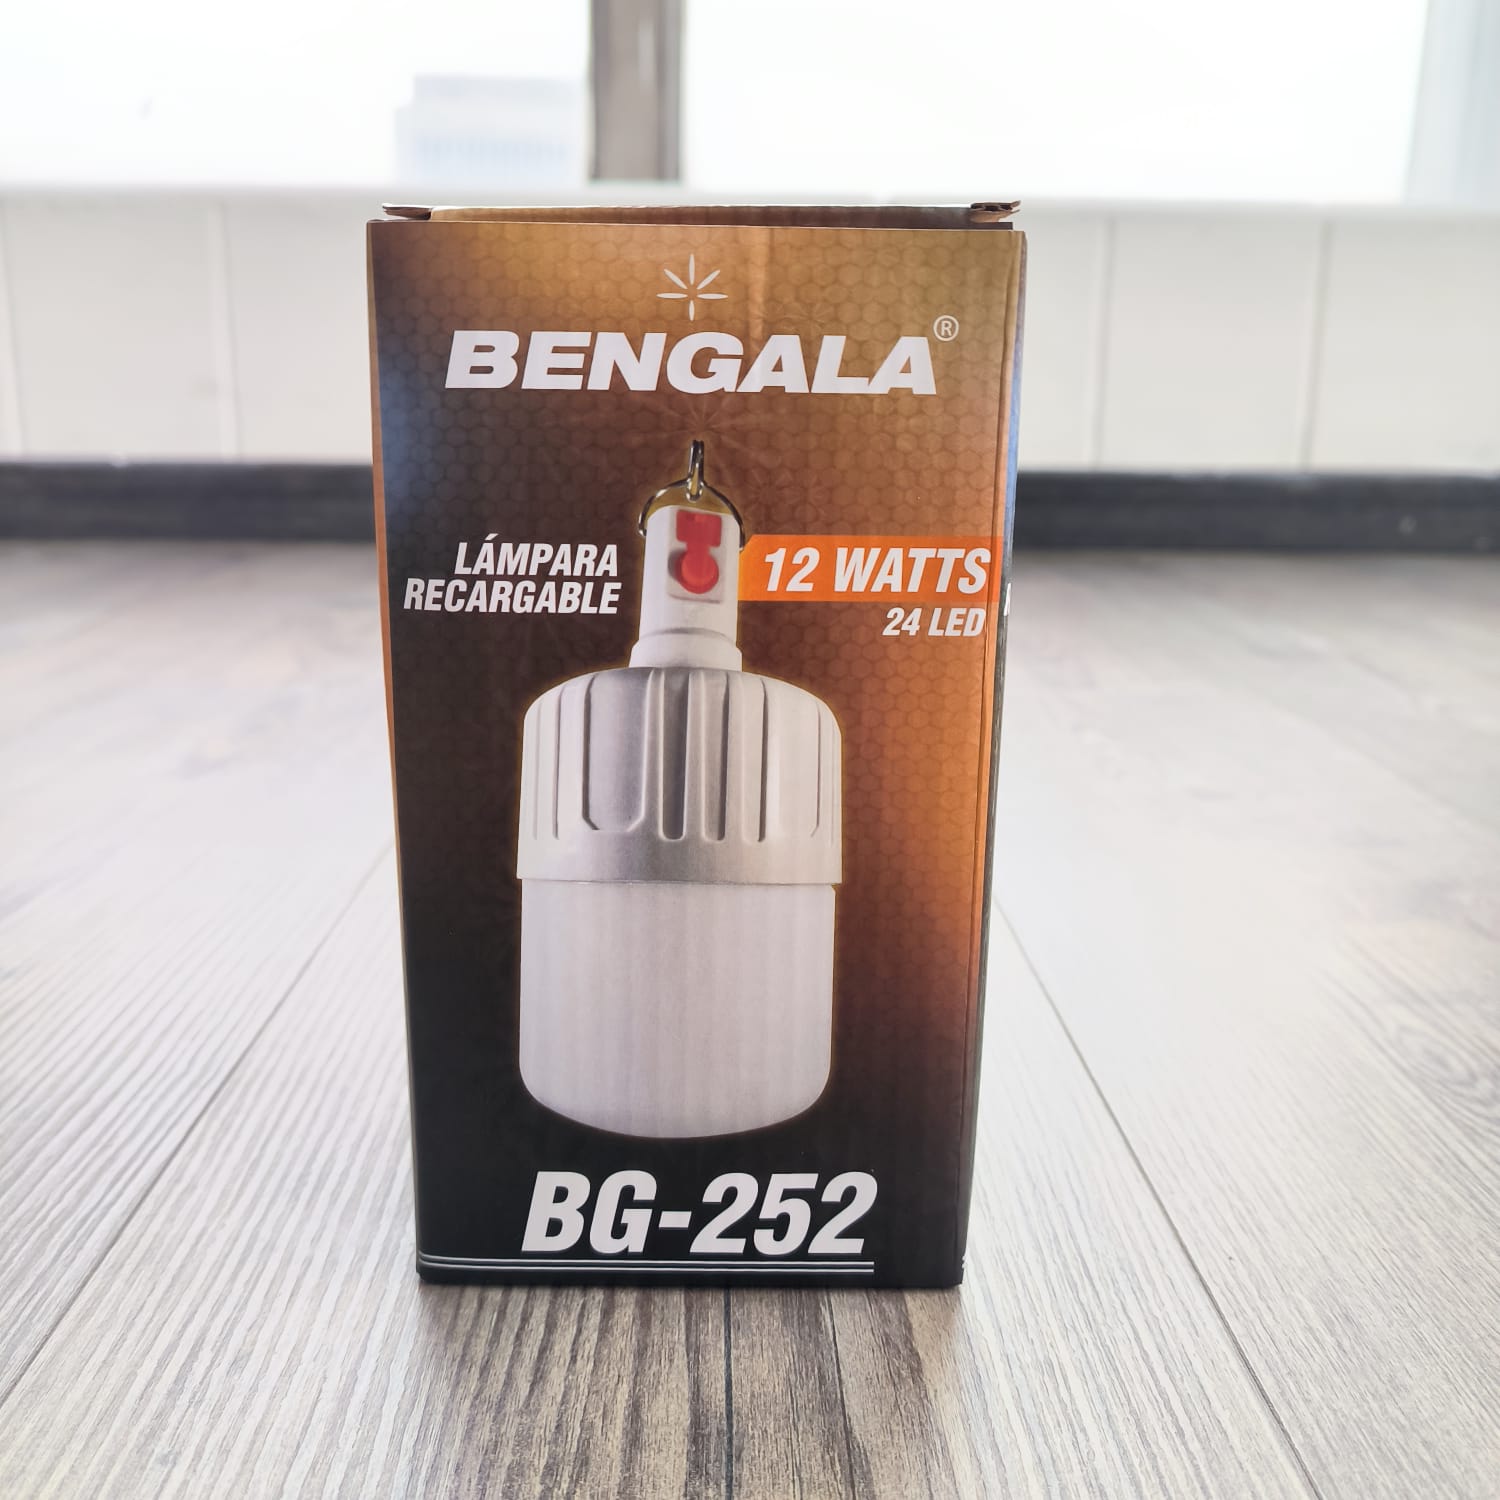 Bombillo lámpara recargable led 12watts Bengala